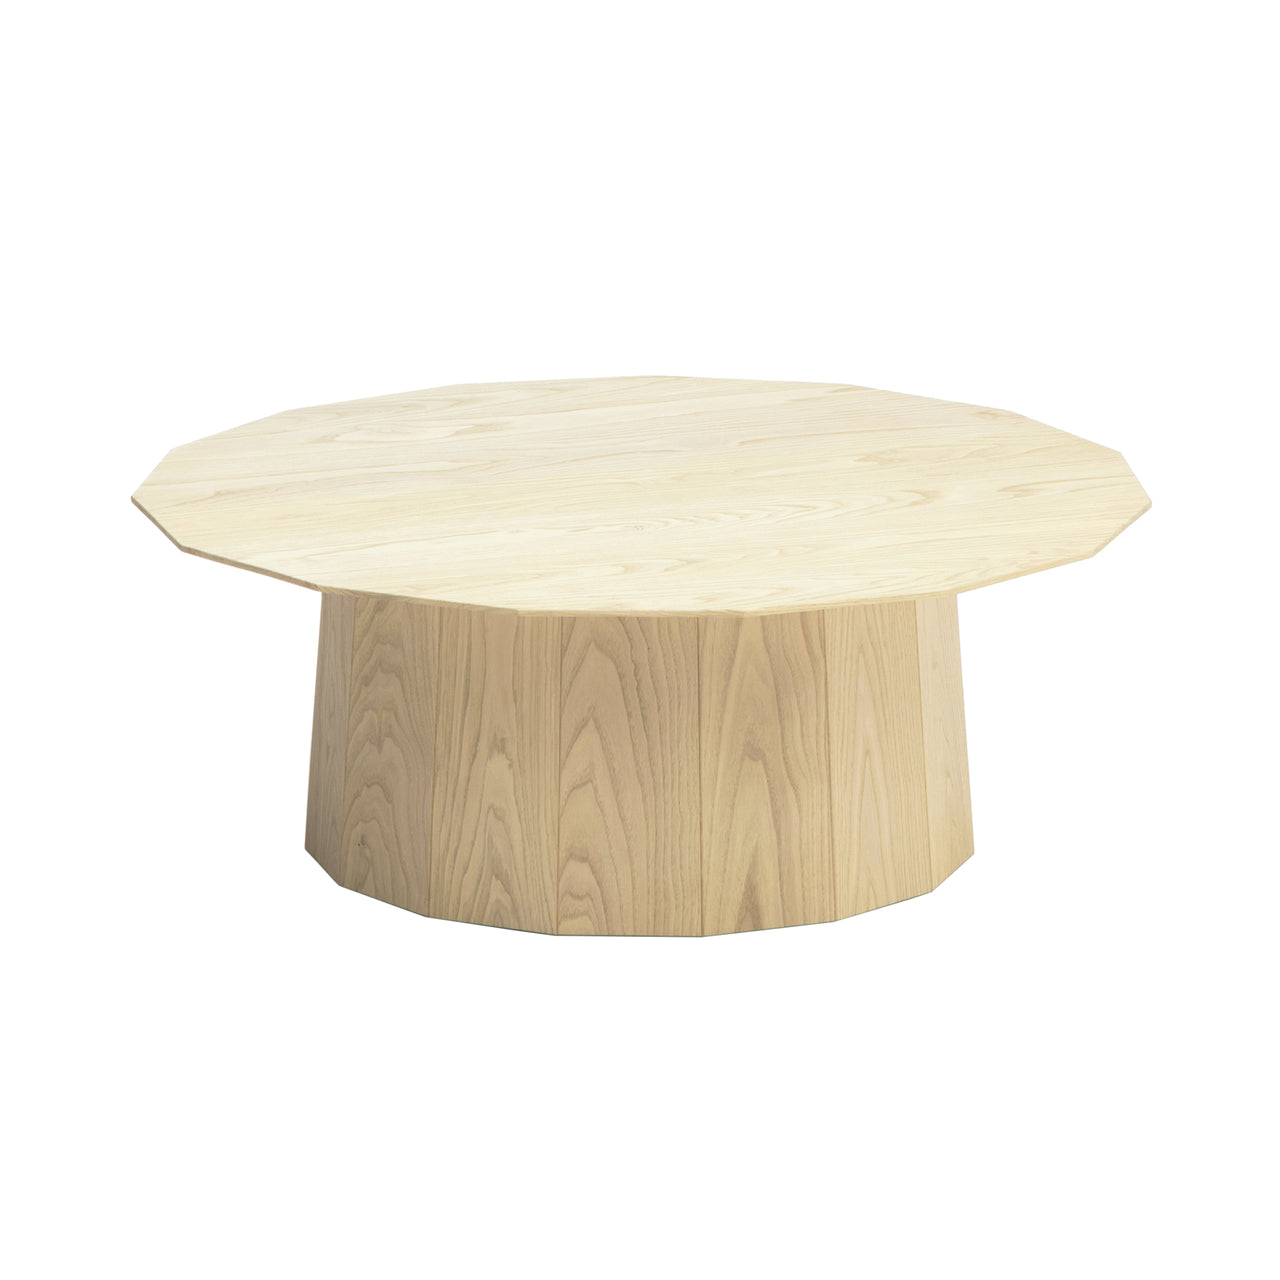 Colour Wood Plain Tables: Extra Large - 35.2